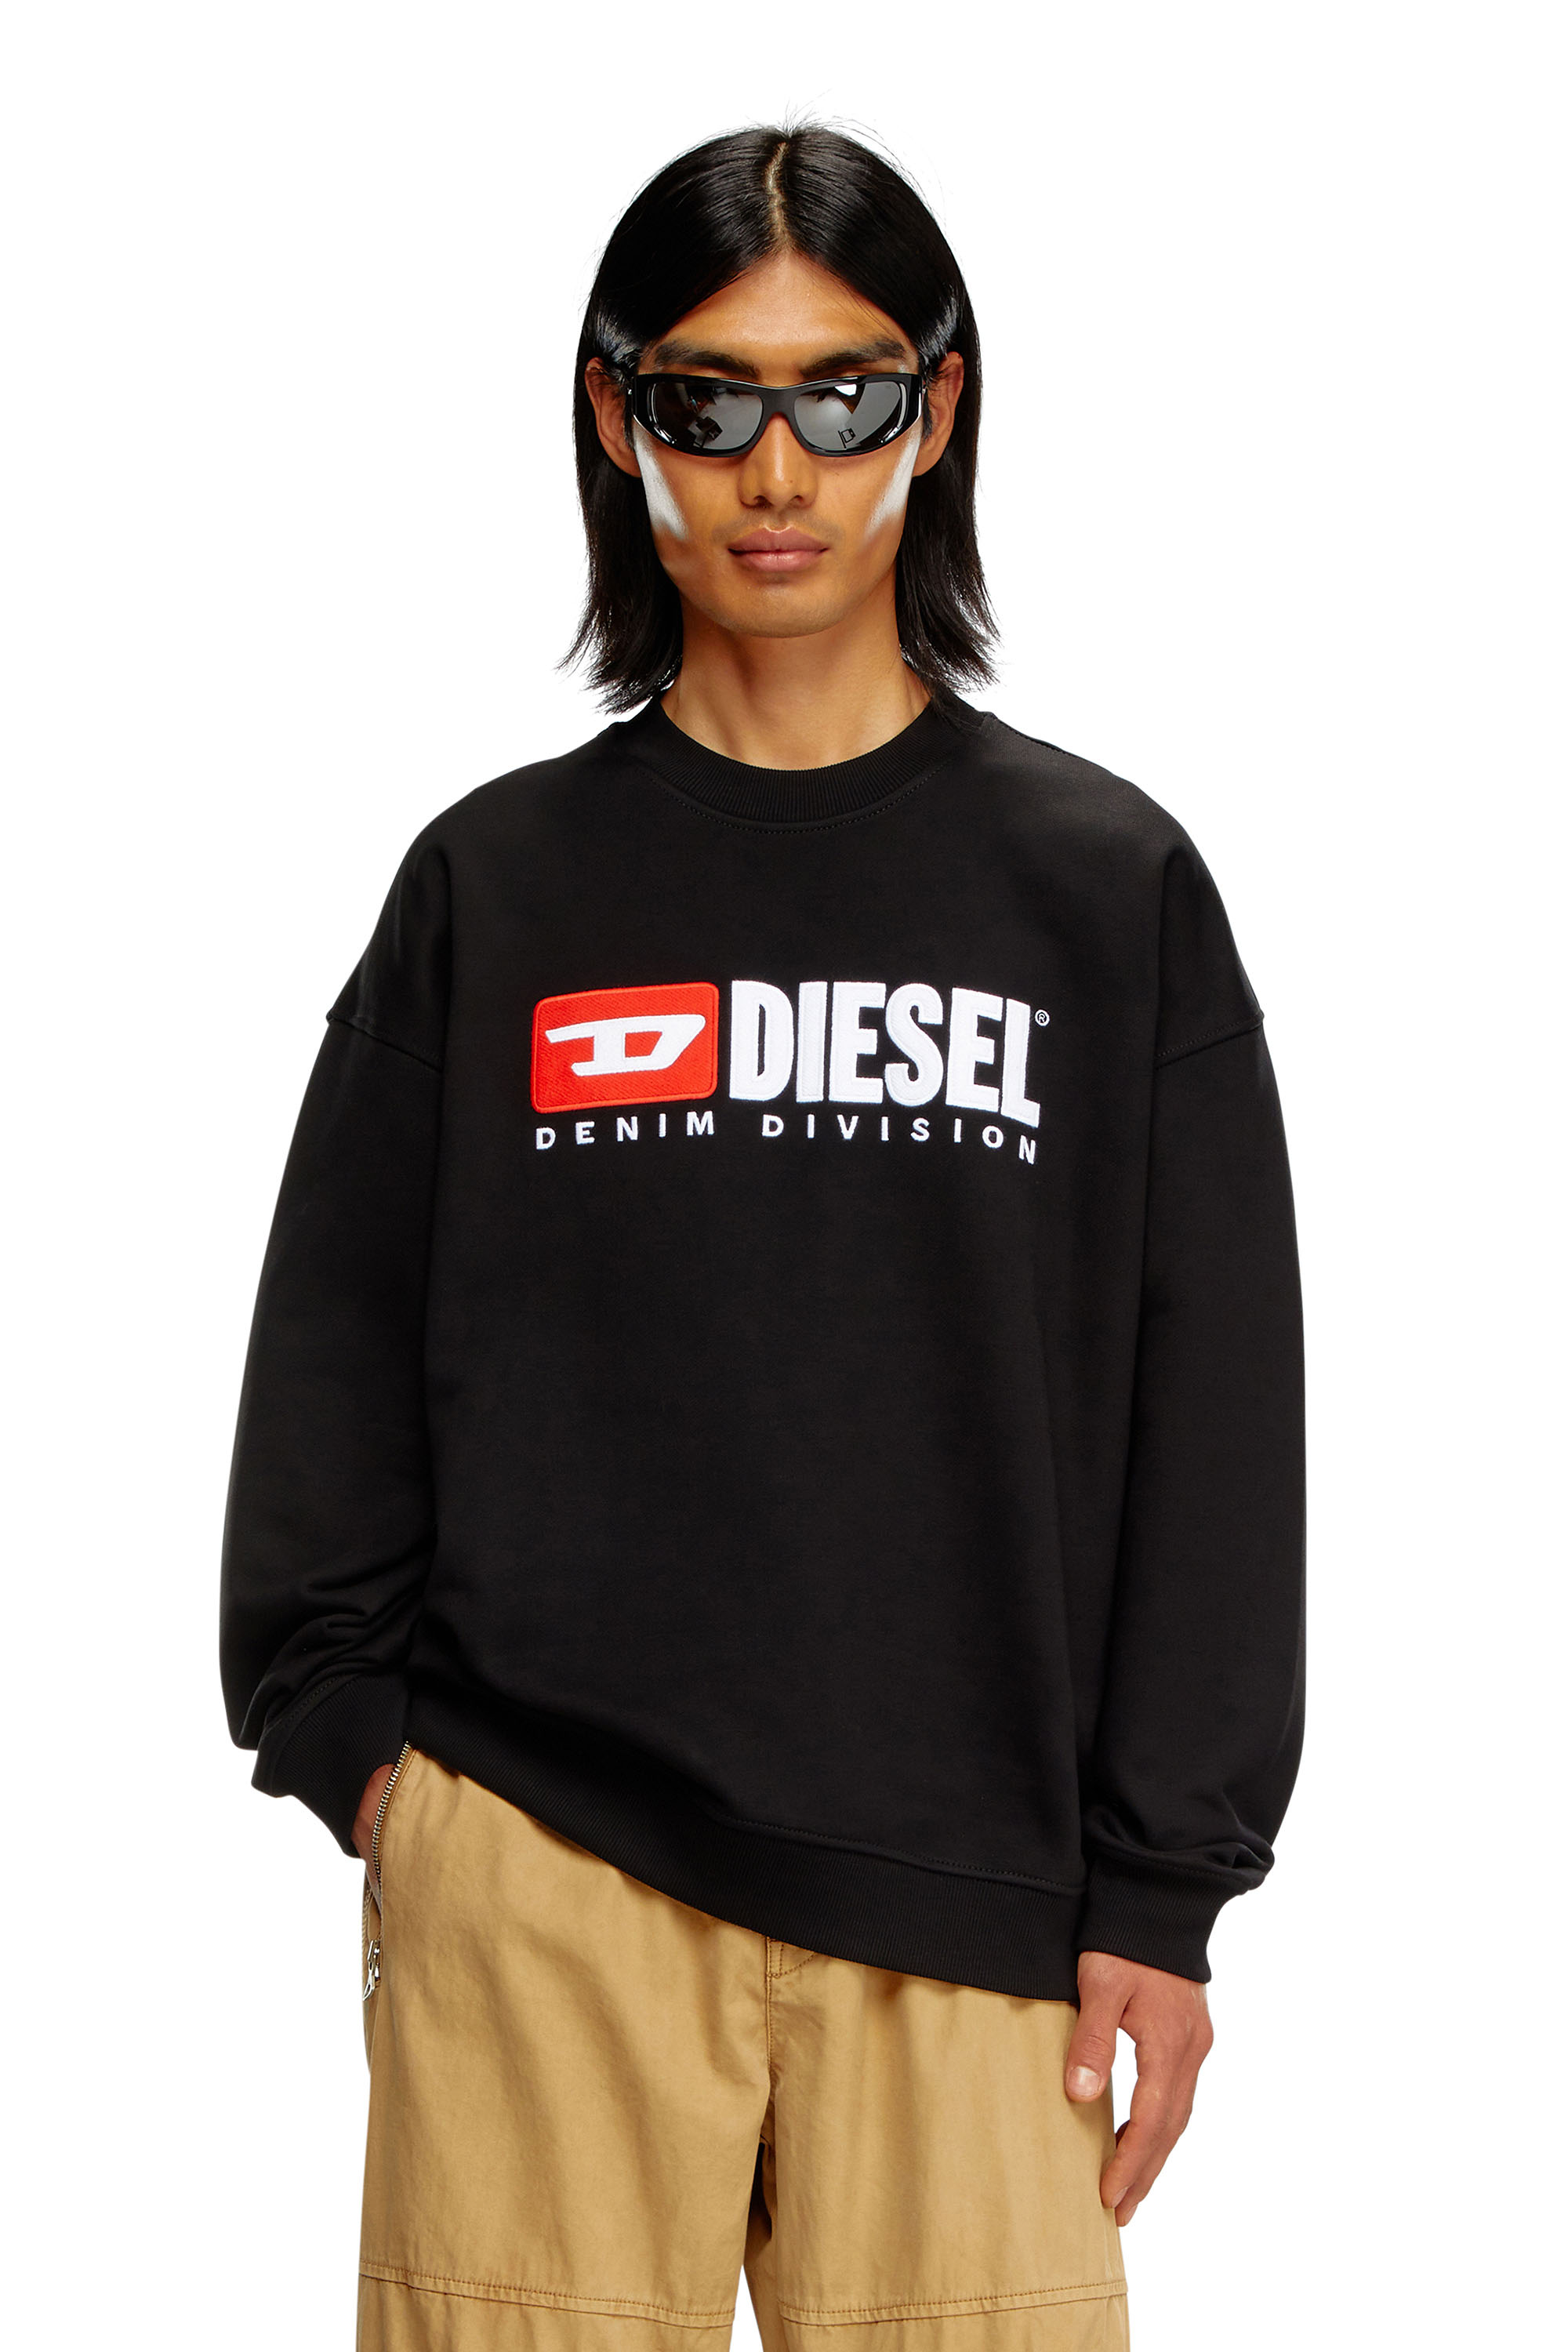 Diesel - S-BOXT-DIV, Homme Sweat-shirt avec logo Denim Division in Noir - Image 1